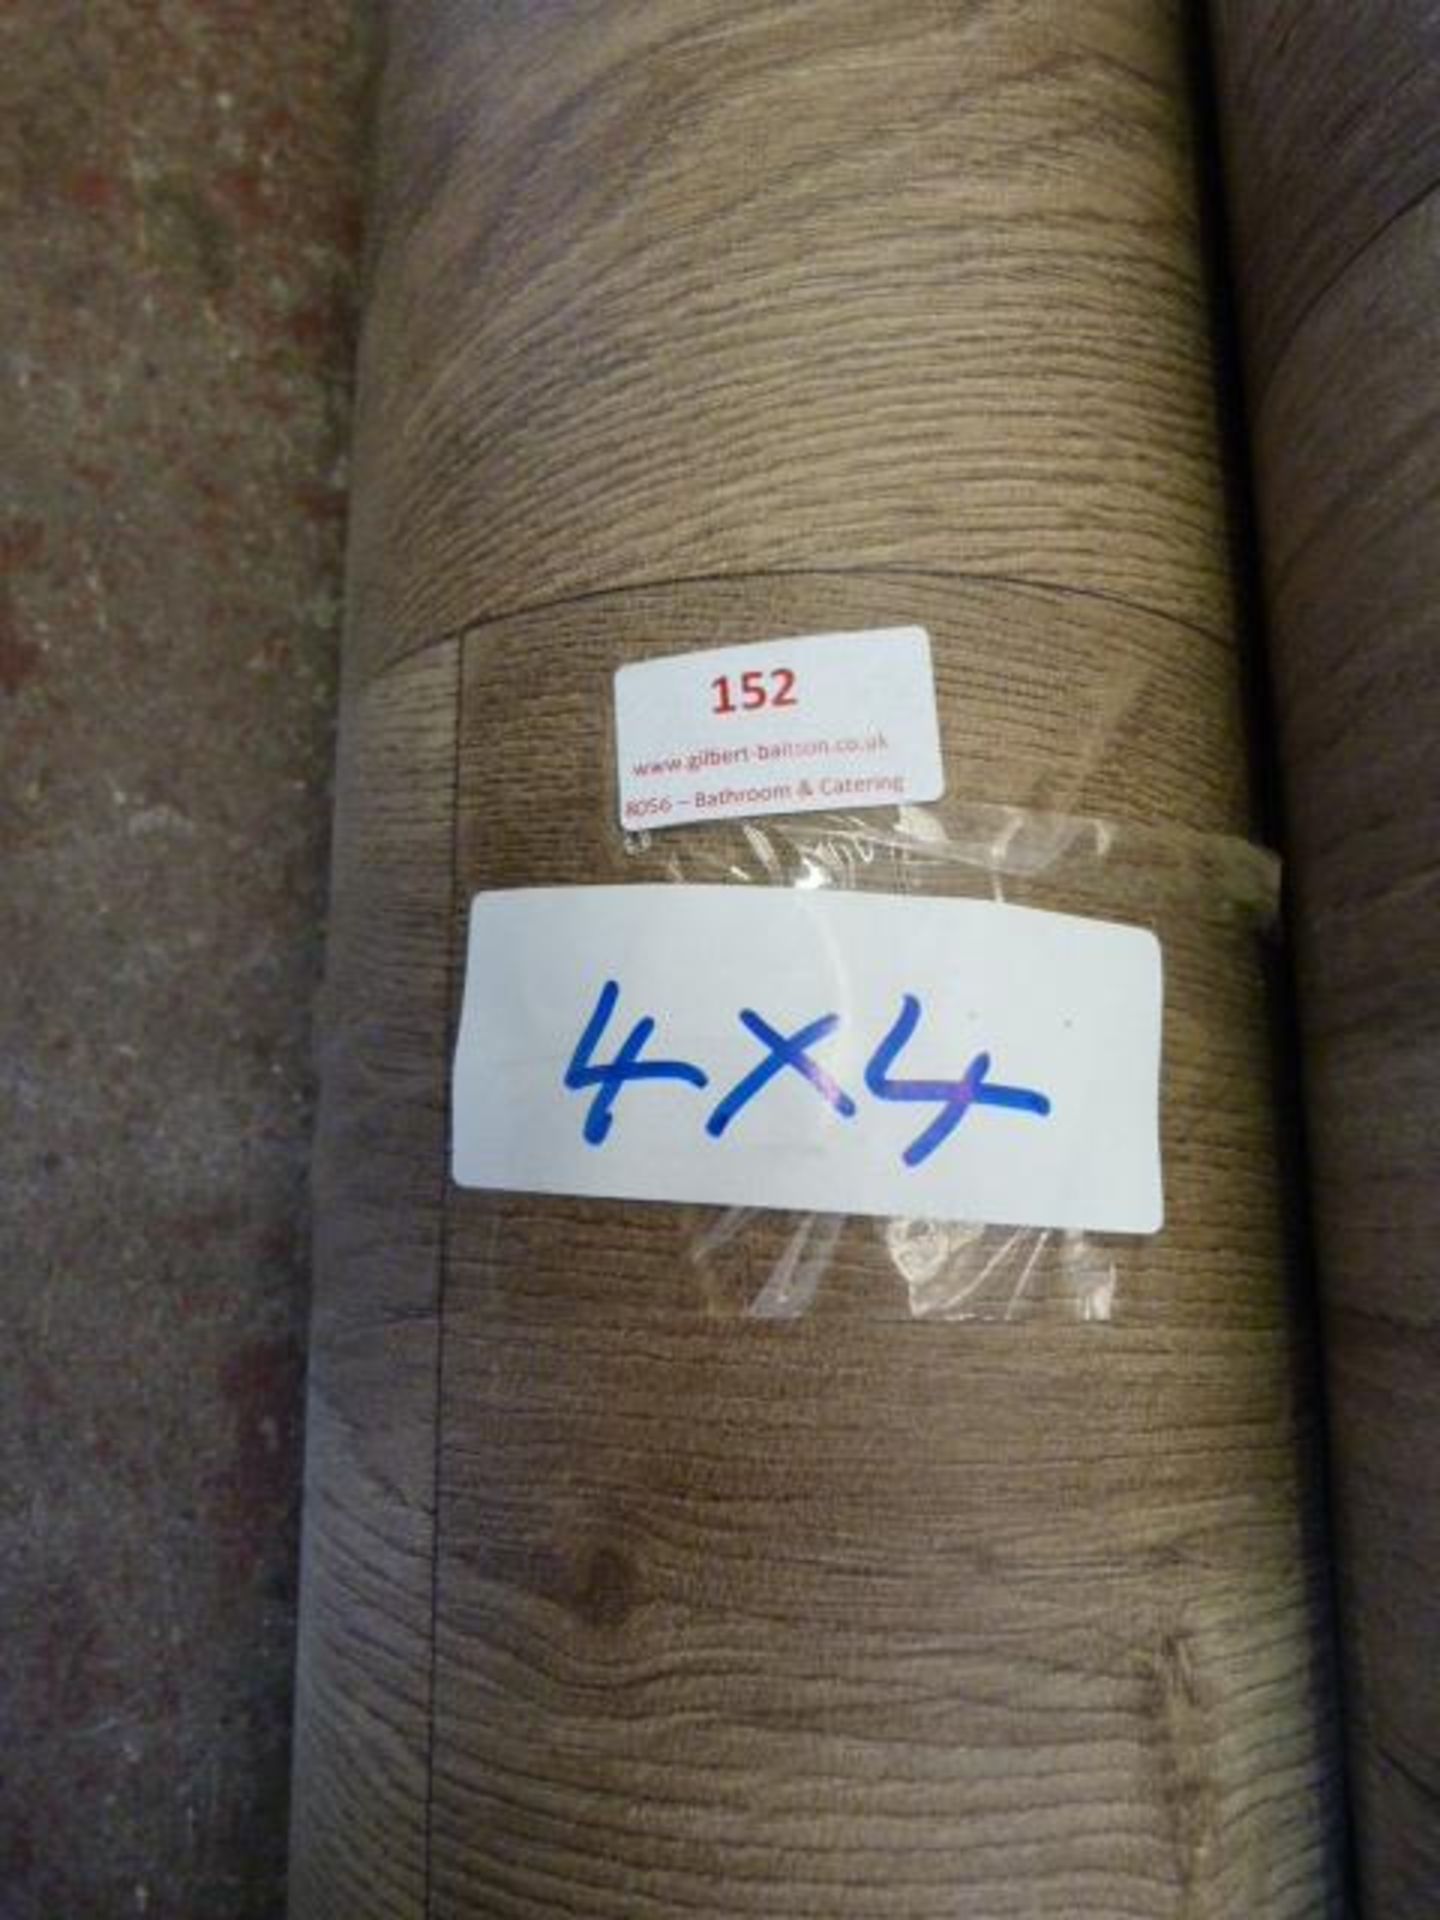 Roll of Wood Effect Lino 4x4m